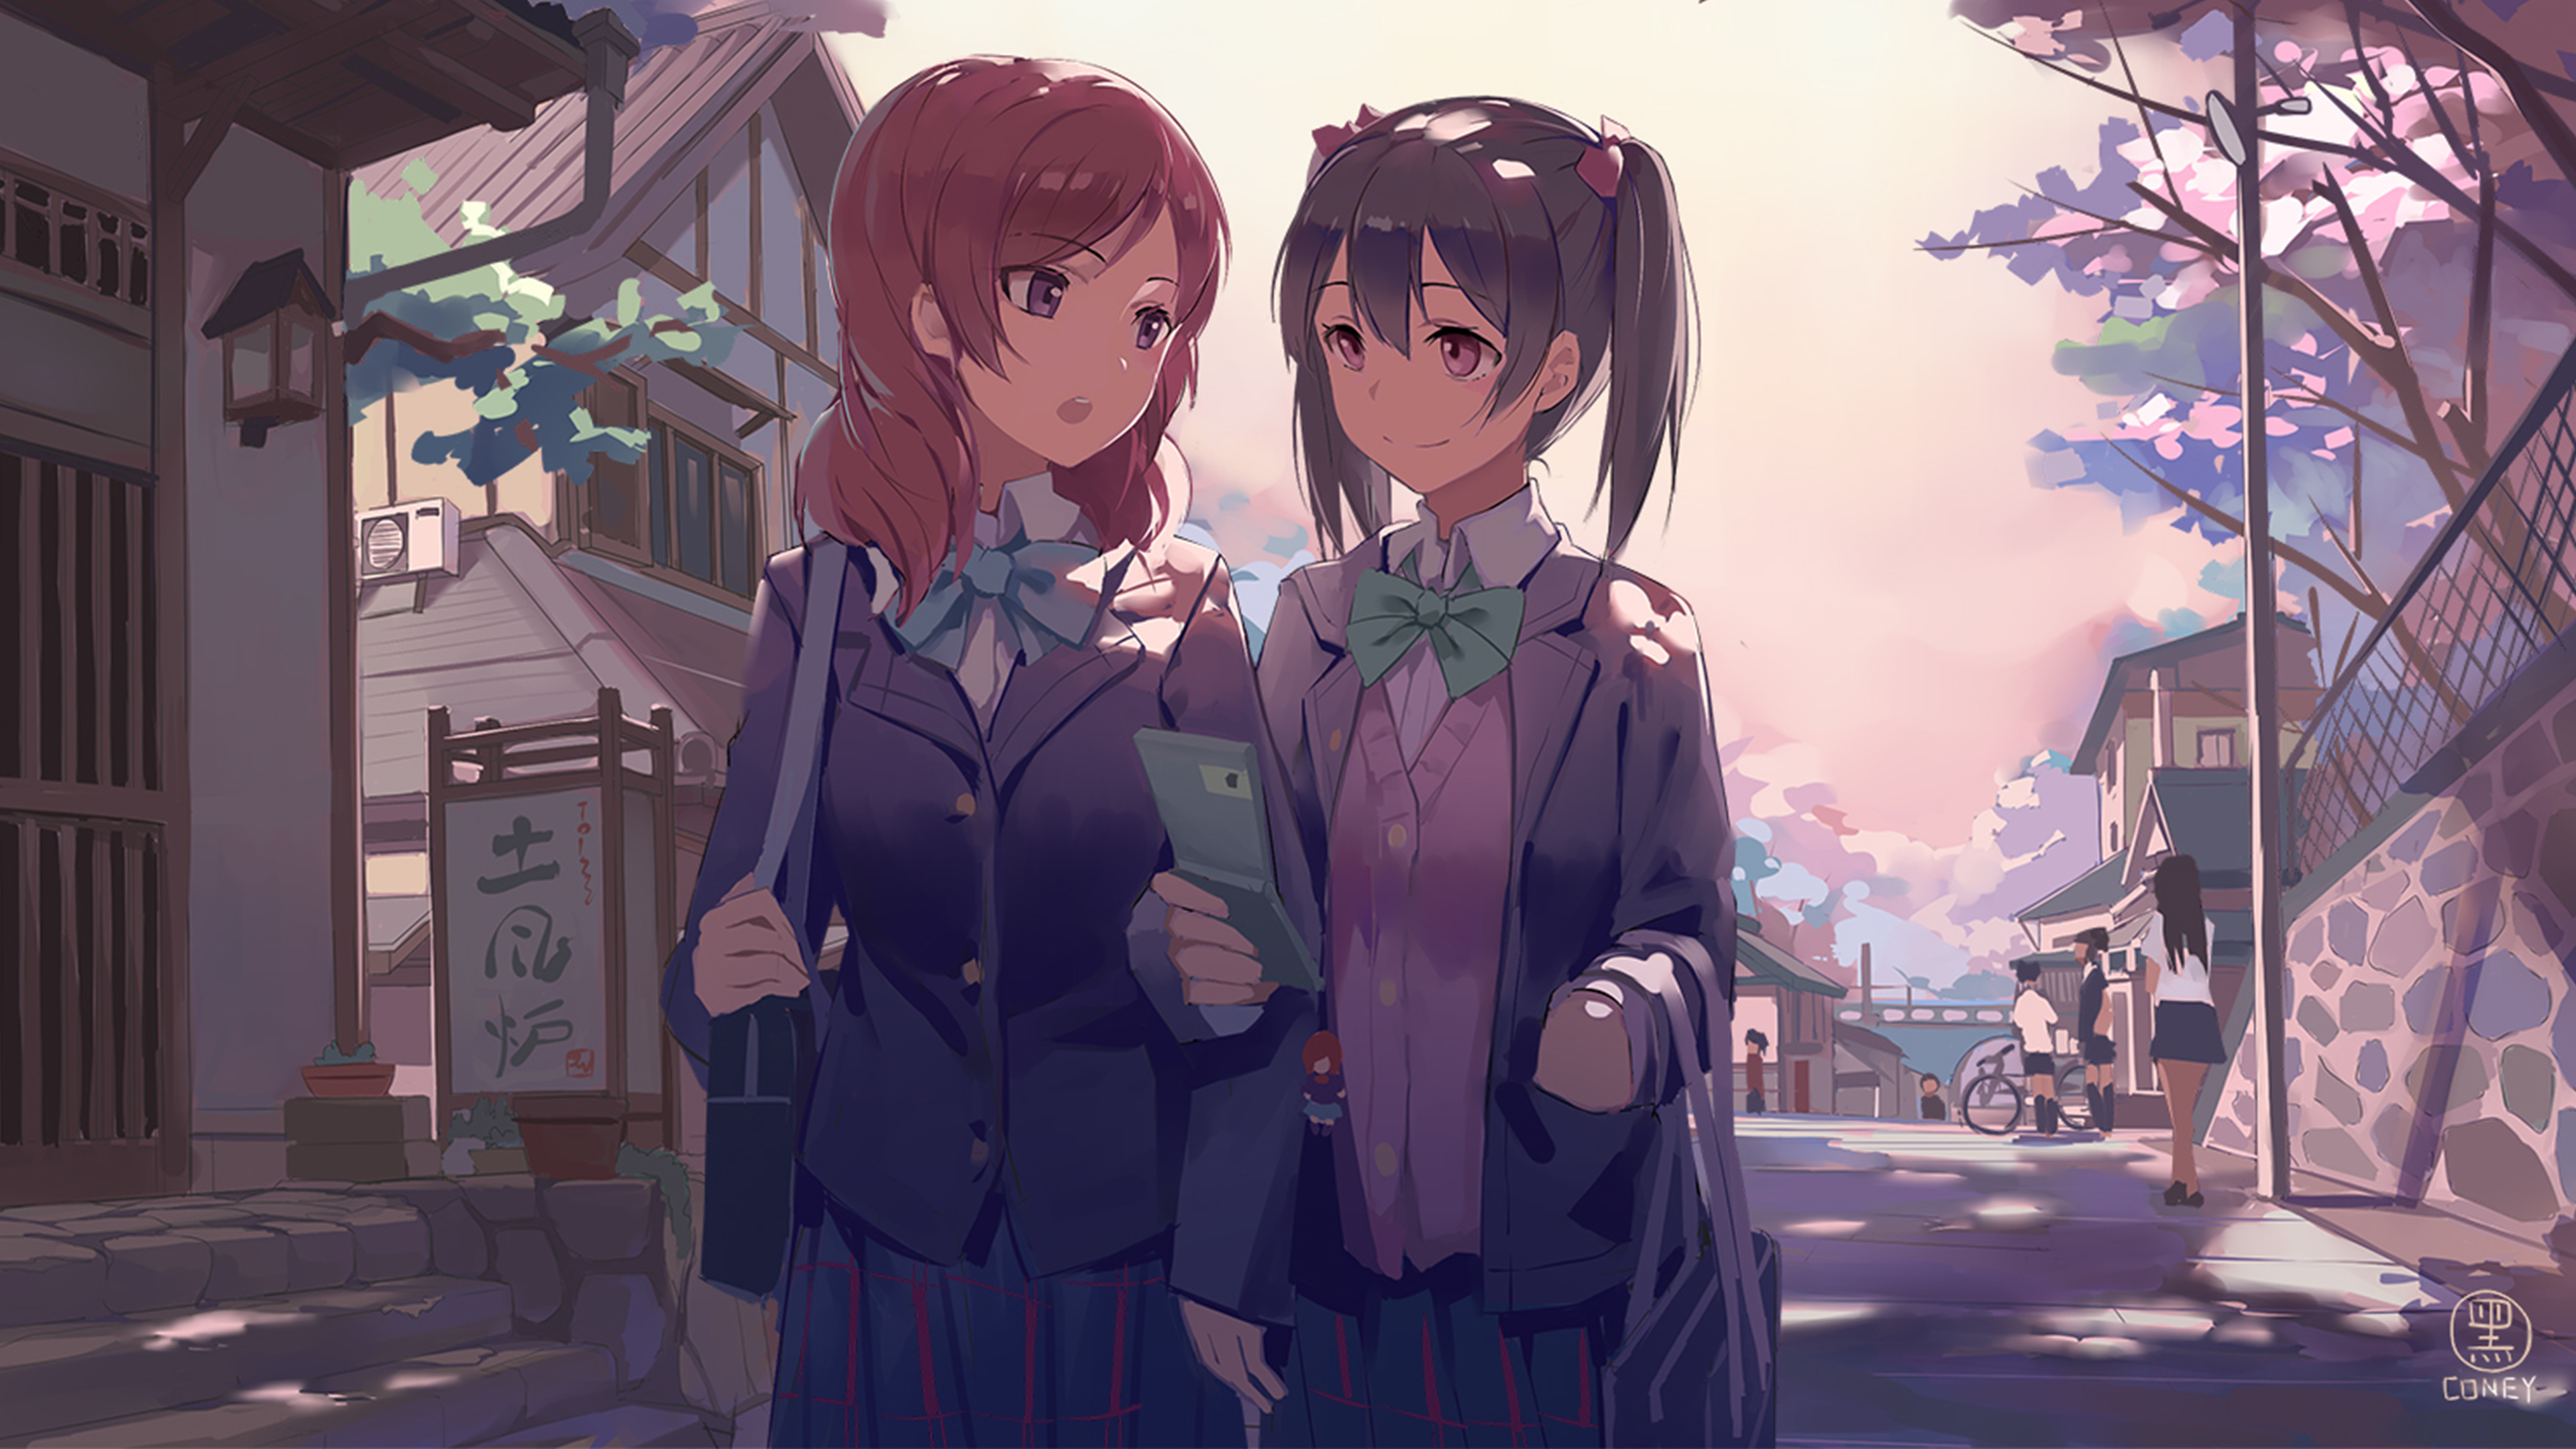 Anime School Girls by coneyrivard